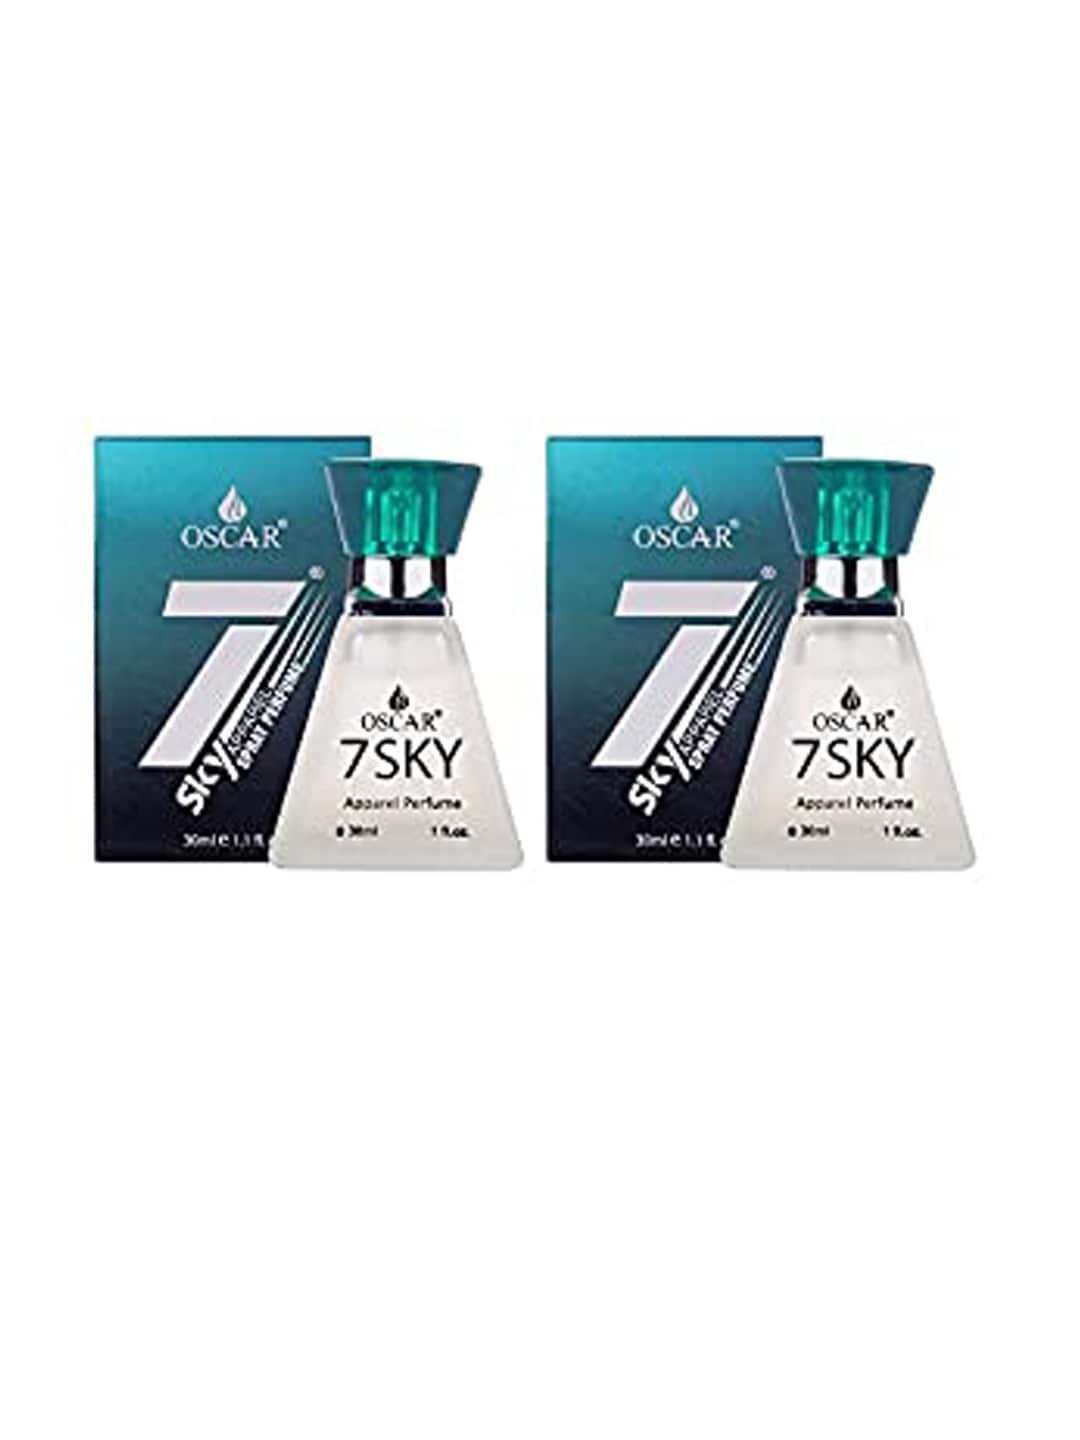 OSCAR Set of 2 7Sky Feisty Long Lasting Eau De Perfume - 30 ml each